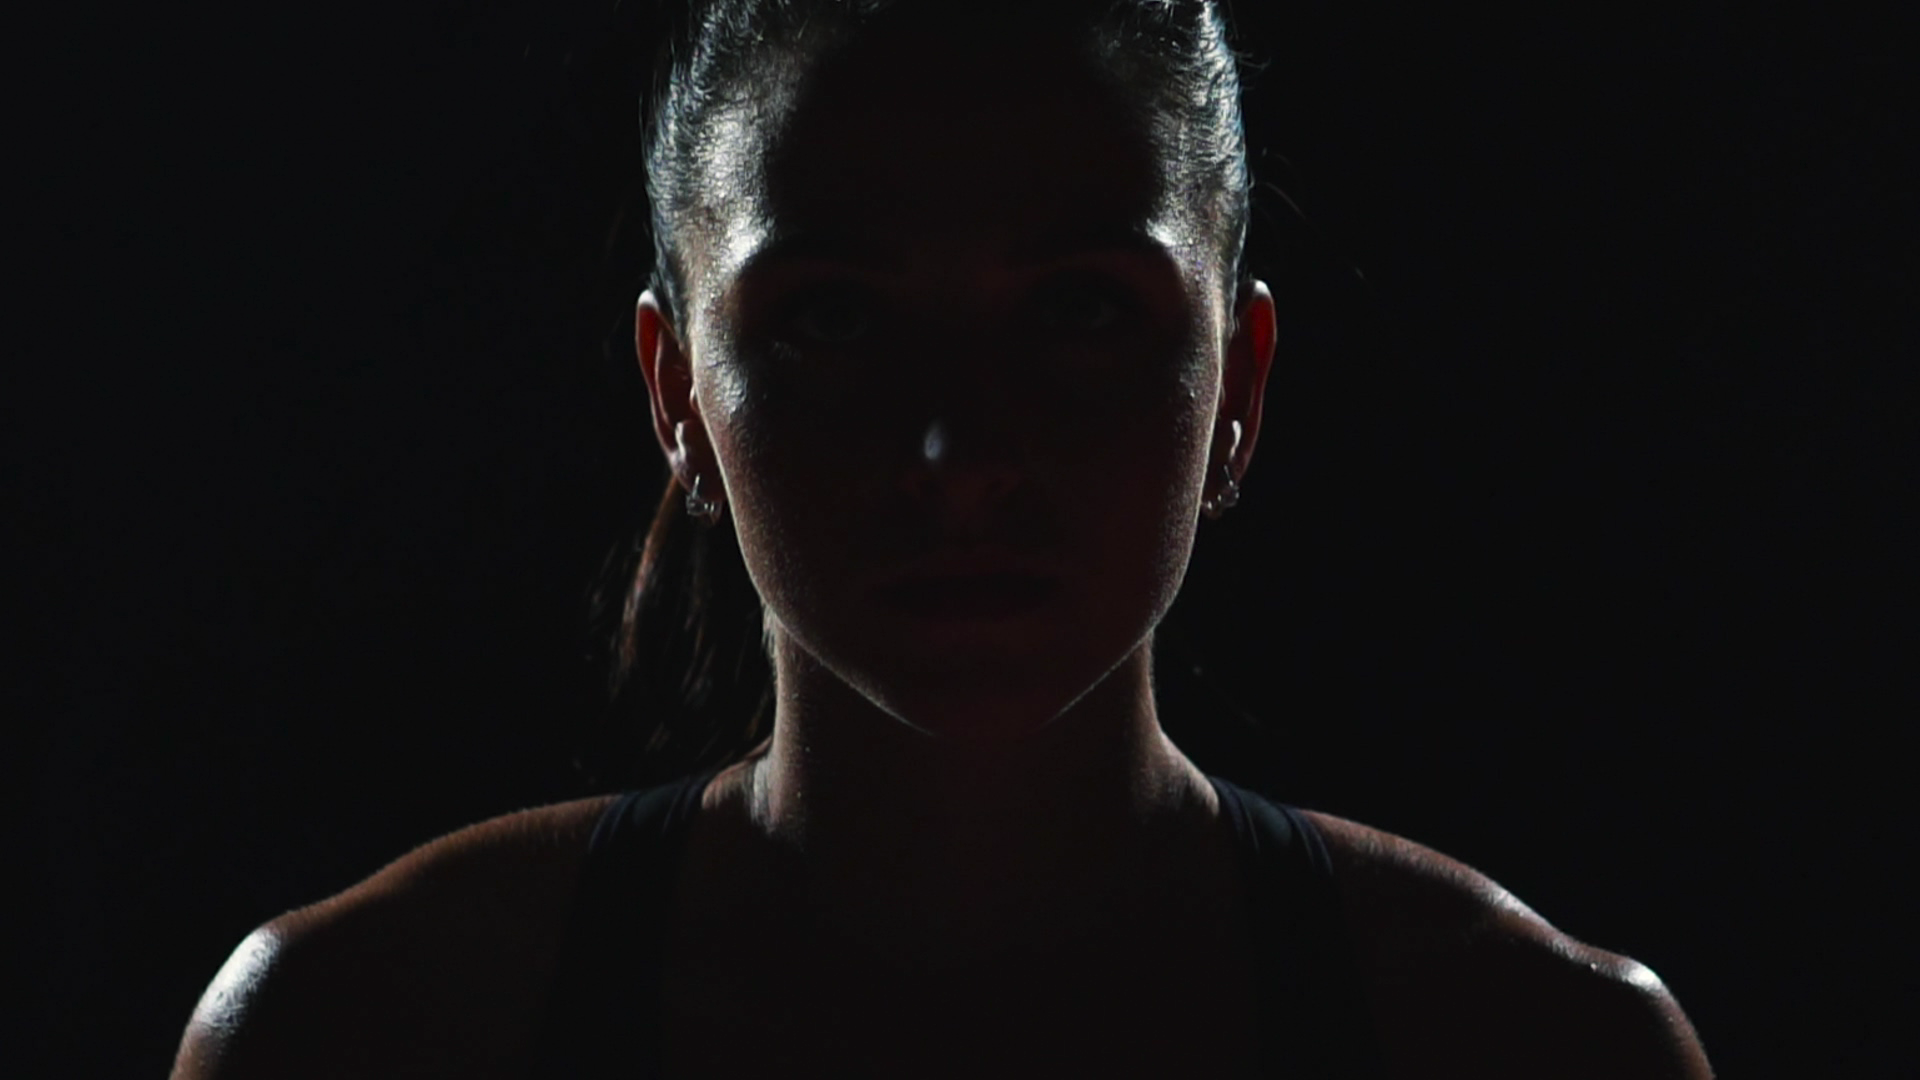 Dramatic lighting of female athlete representing practice of mental skills